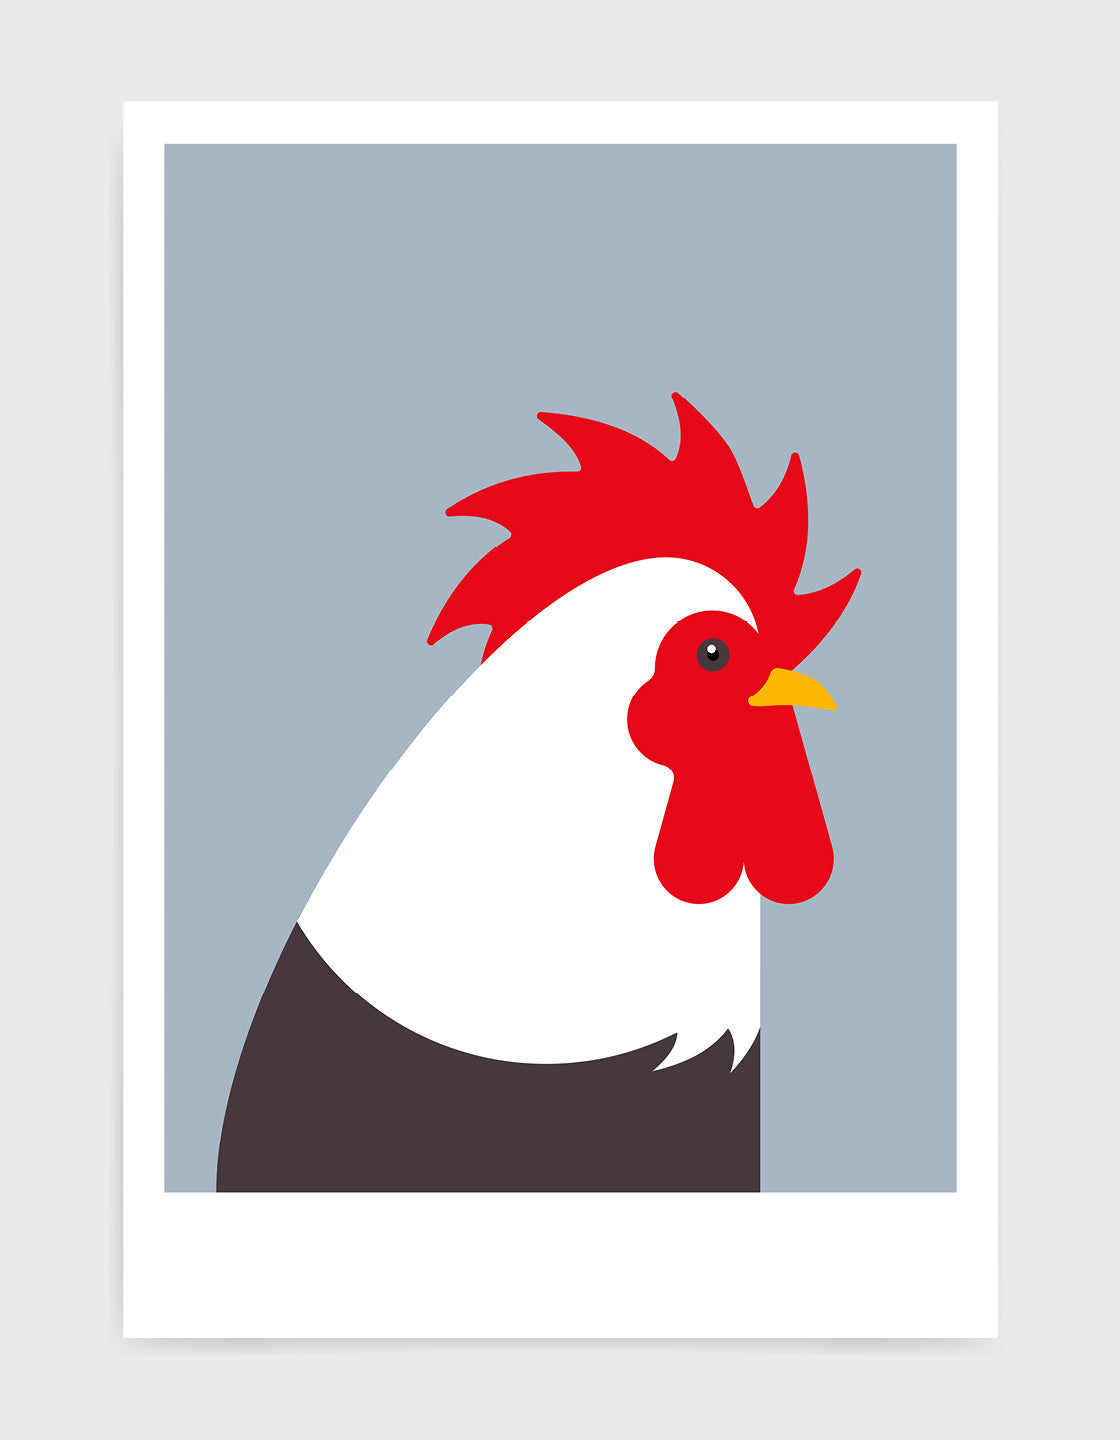 Modern cockerel / chicken illustration against a light grey background